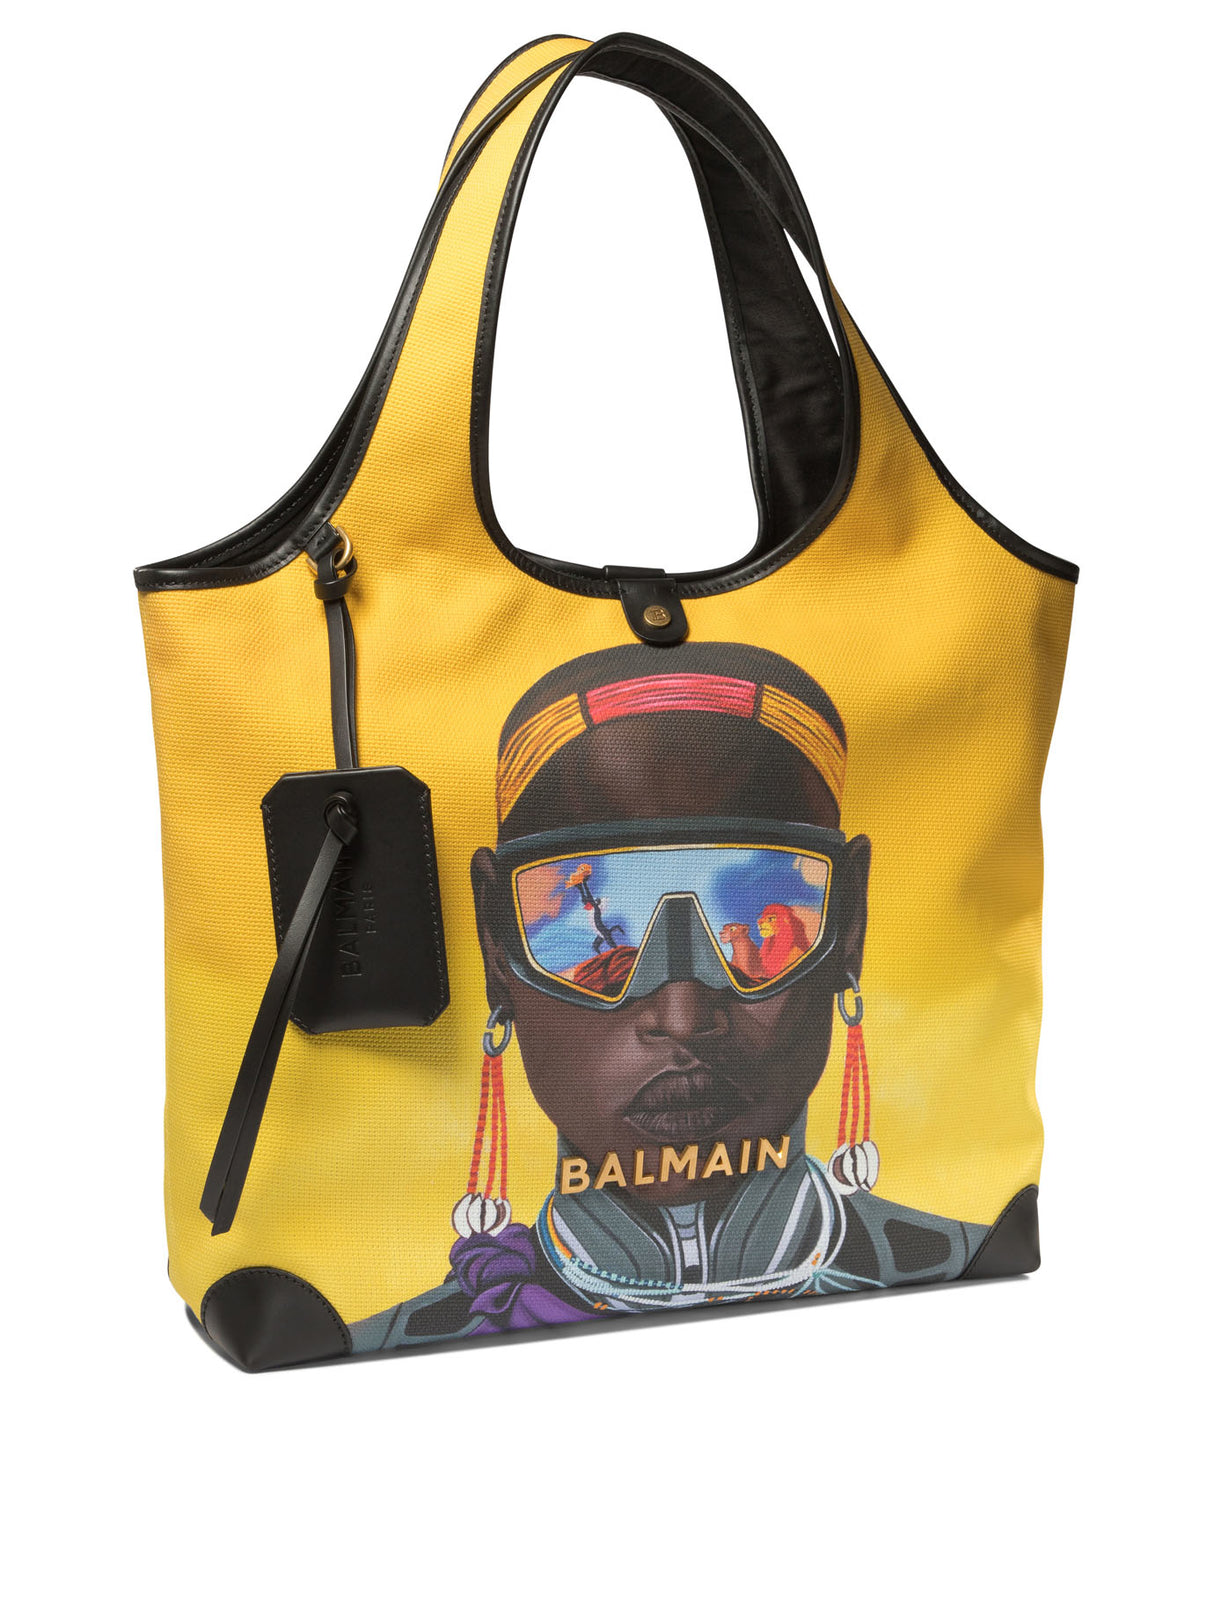 BALMAIN "THE LION KING" Tote Handbag Handbag